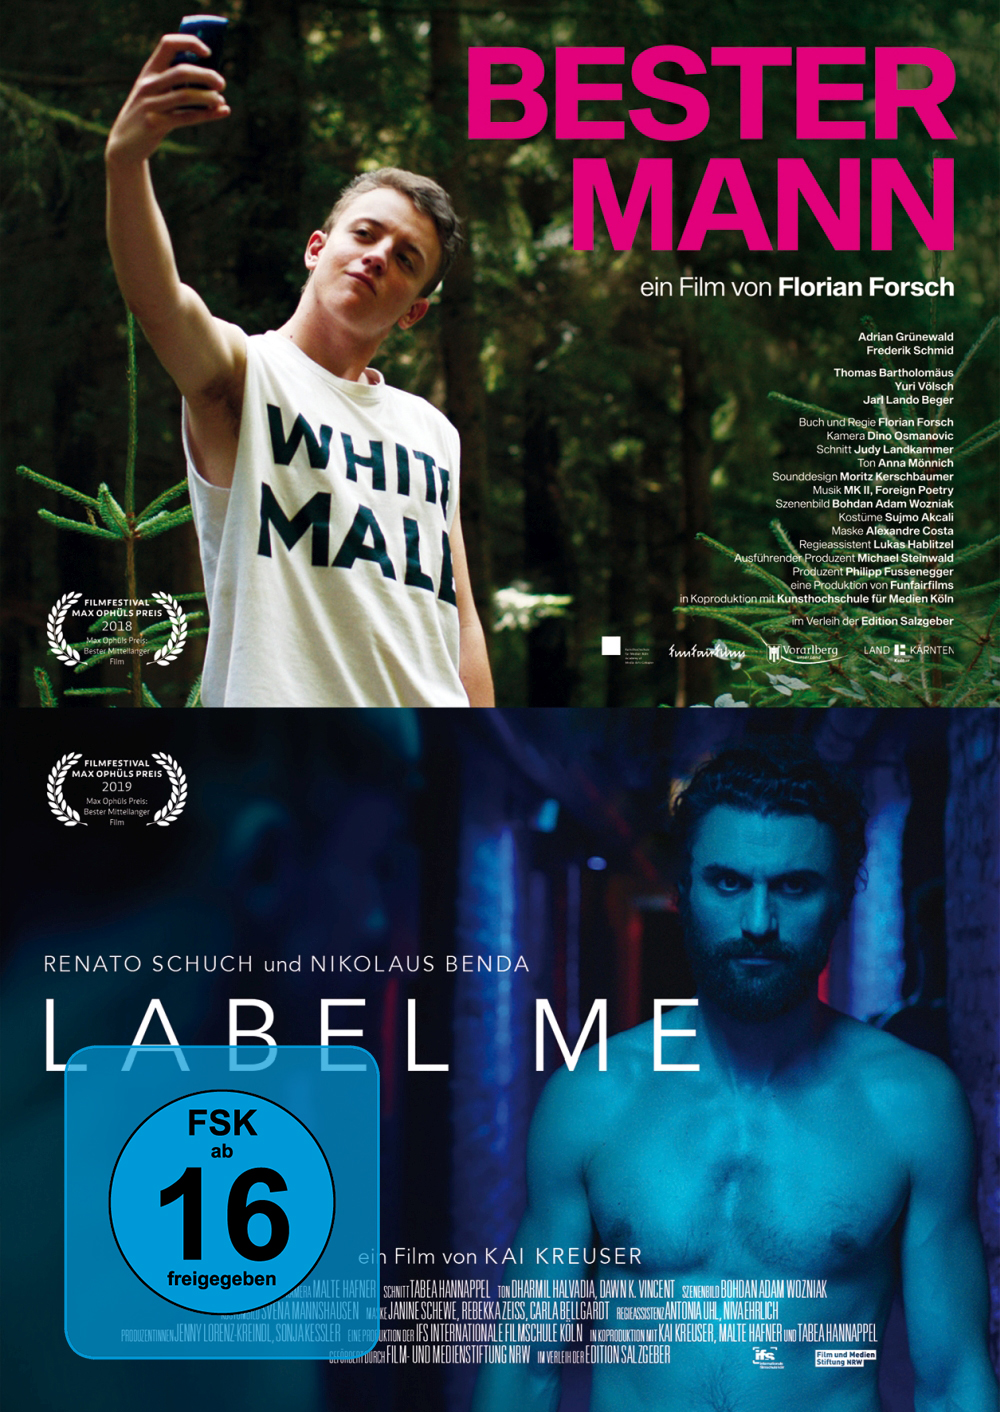 Bester Mann / Label Me